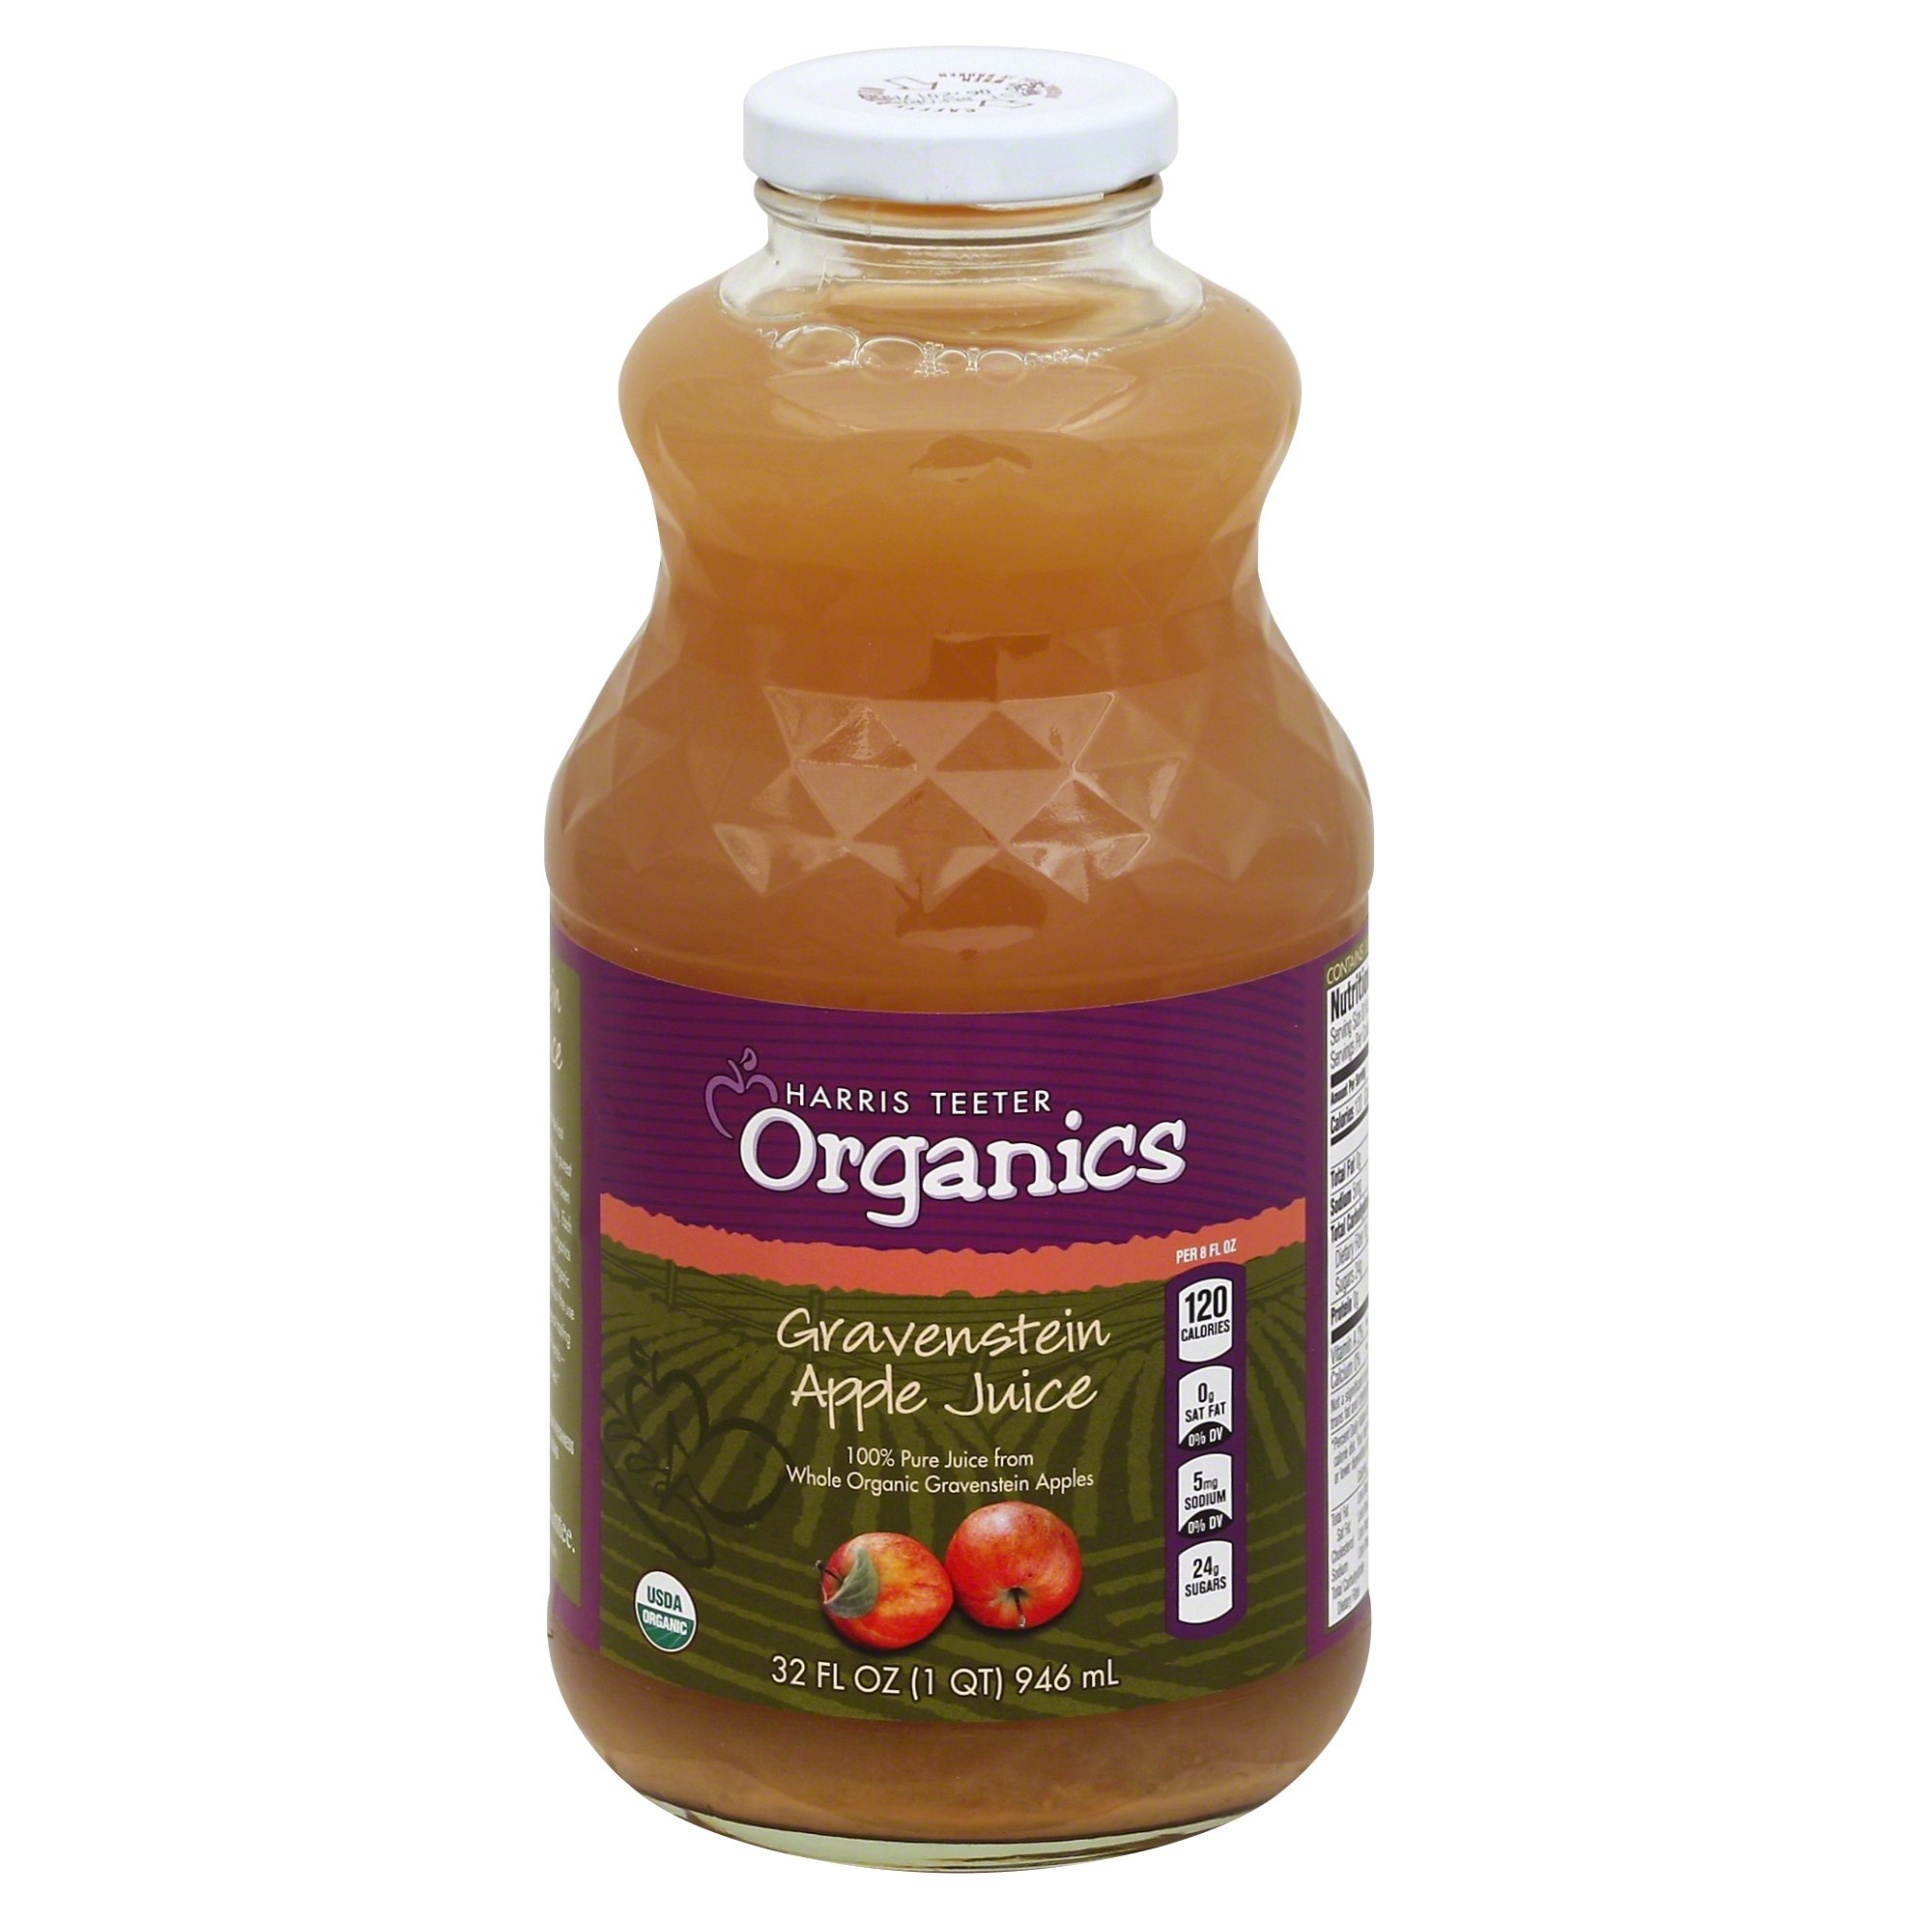 slide 1 of 1, HT Organics Apple Juice - Gravenstein, 1 qt